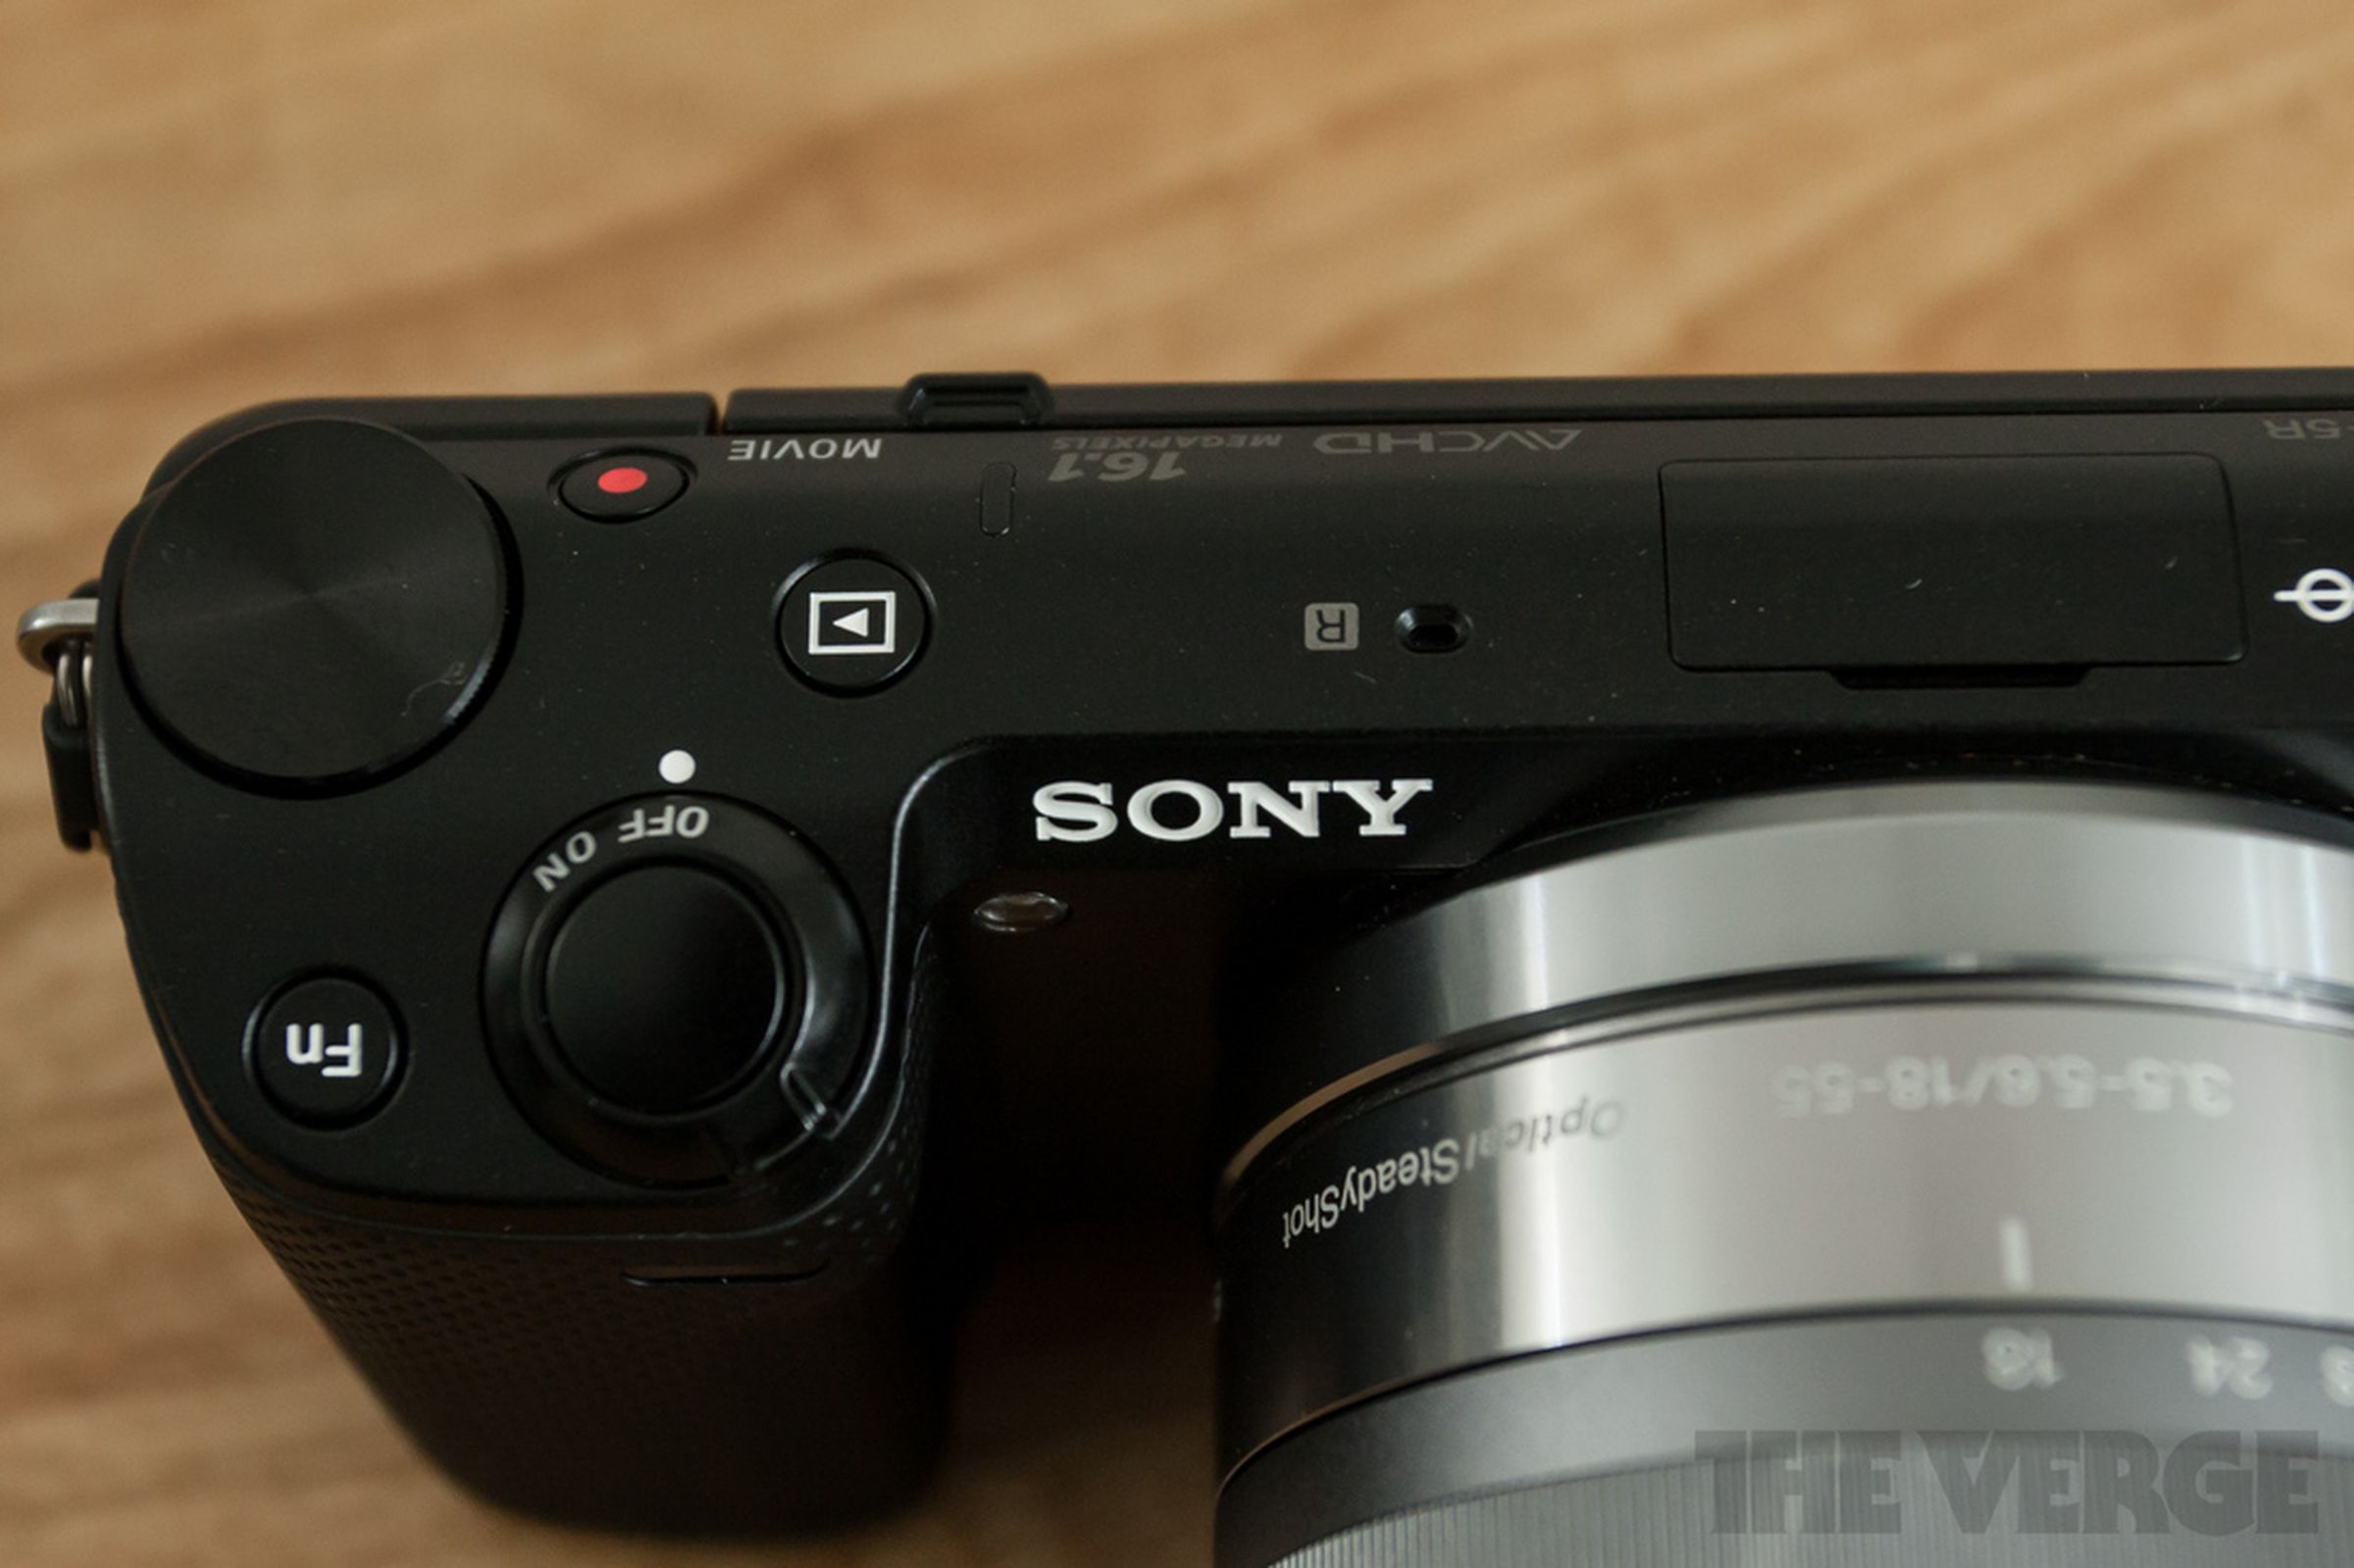 Sony NEX-5R review photos